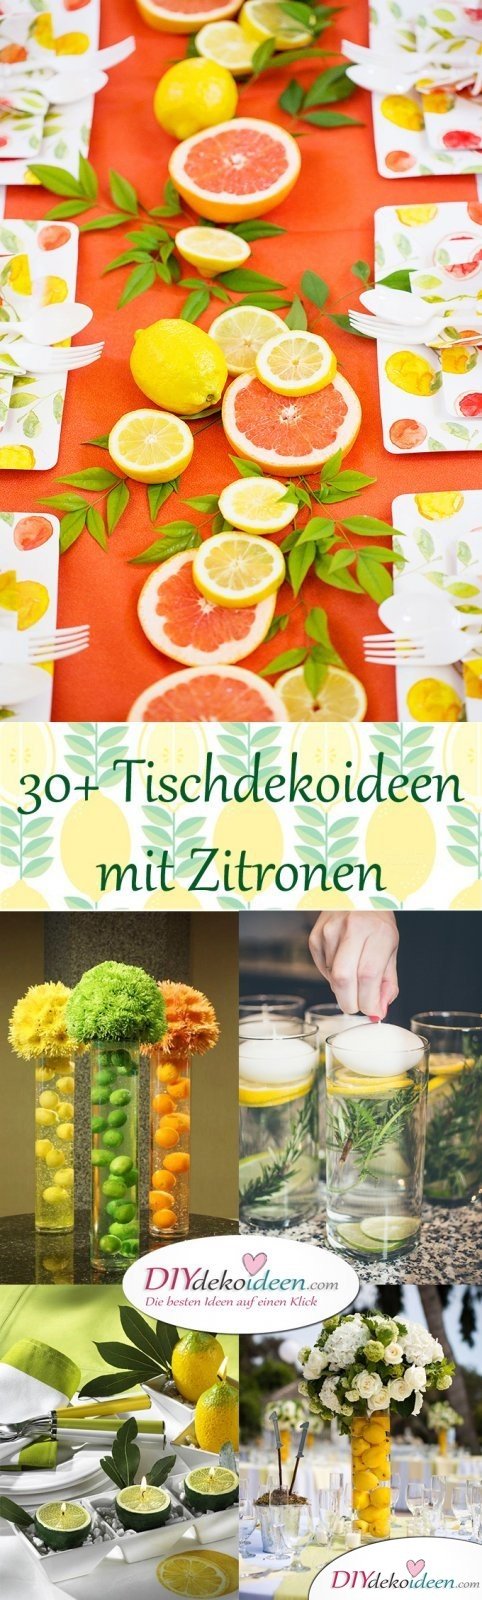 30+ Tischdeko Ideen mit Zitronen - Erfrischende DIY Dekoideen